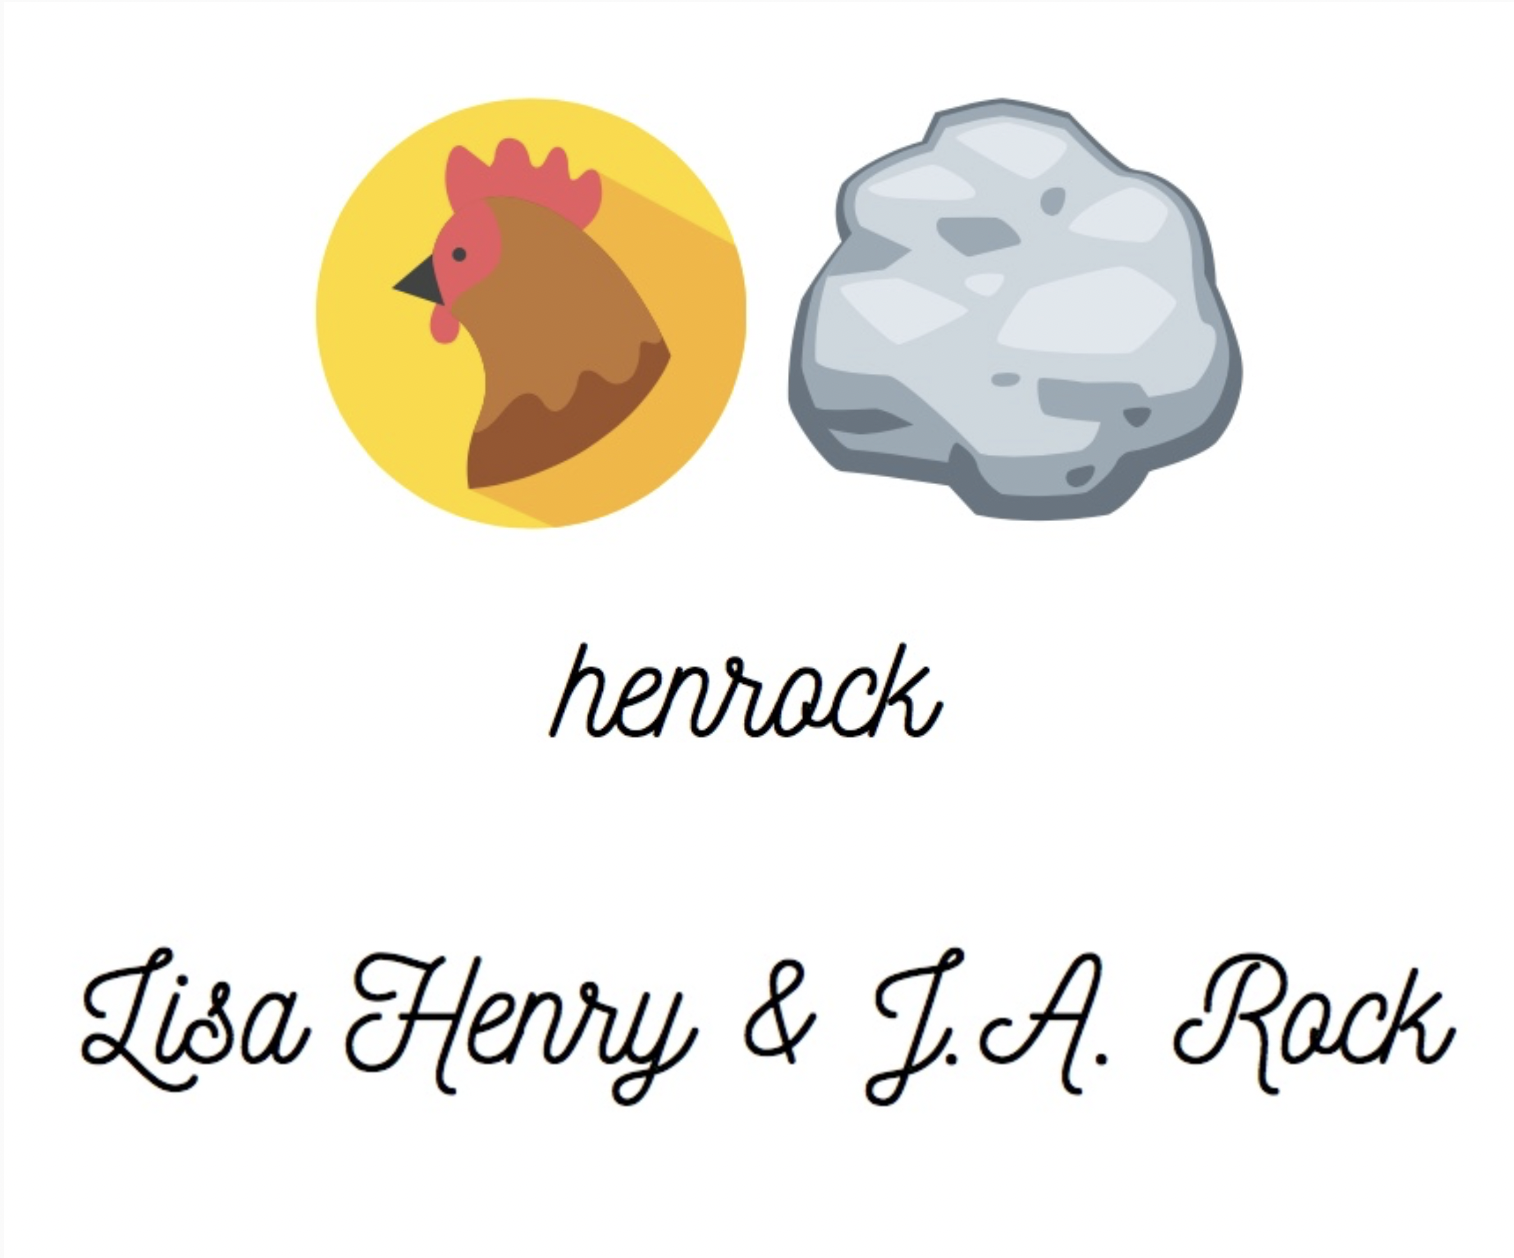 Hen Rock newsletter logo